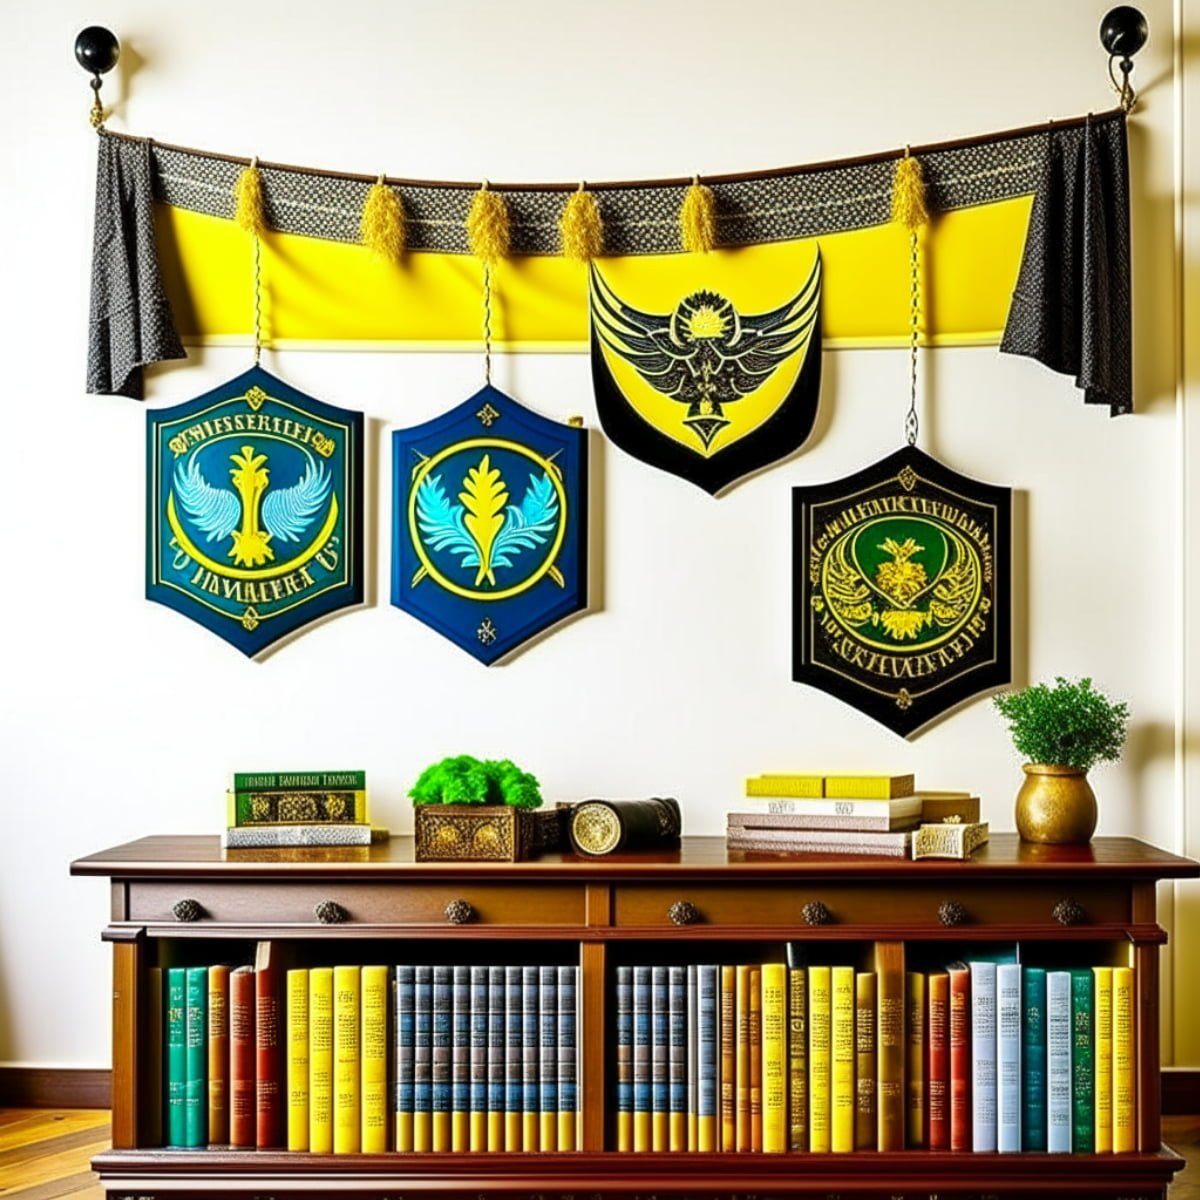 Harry Potter Room Decor The Hogwarts crest, with its four distinct house symbols